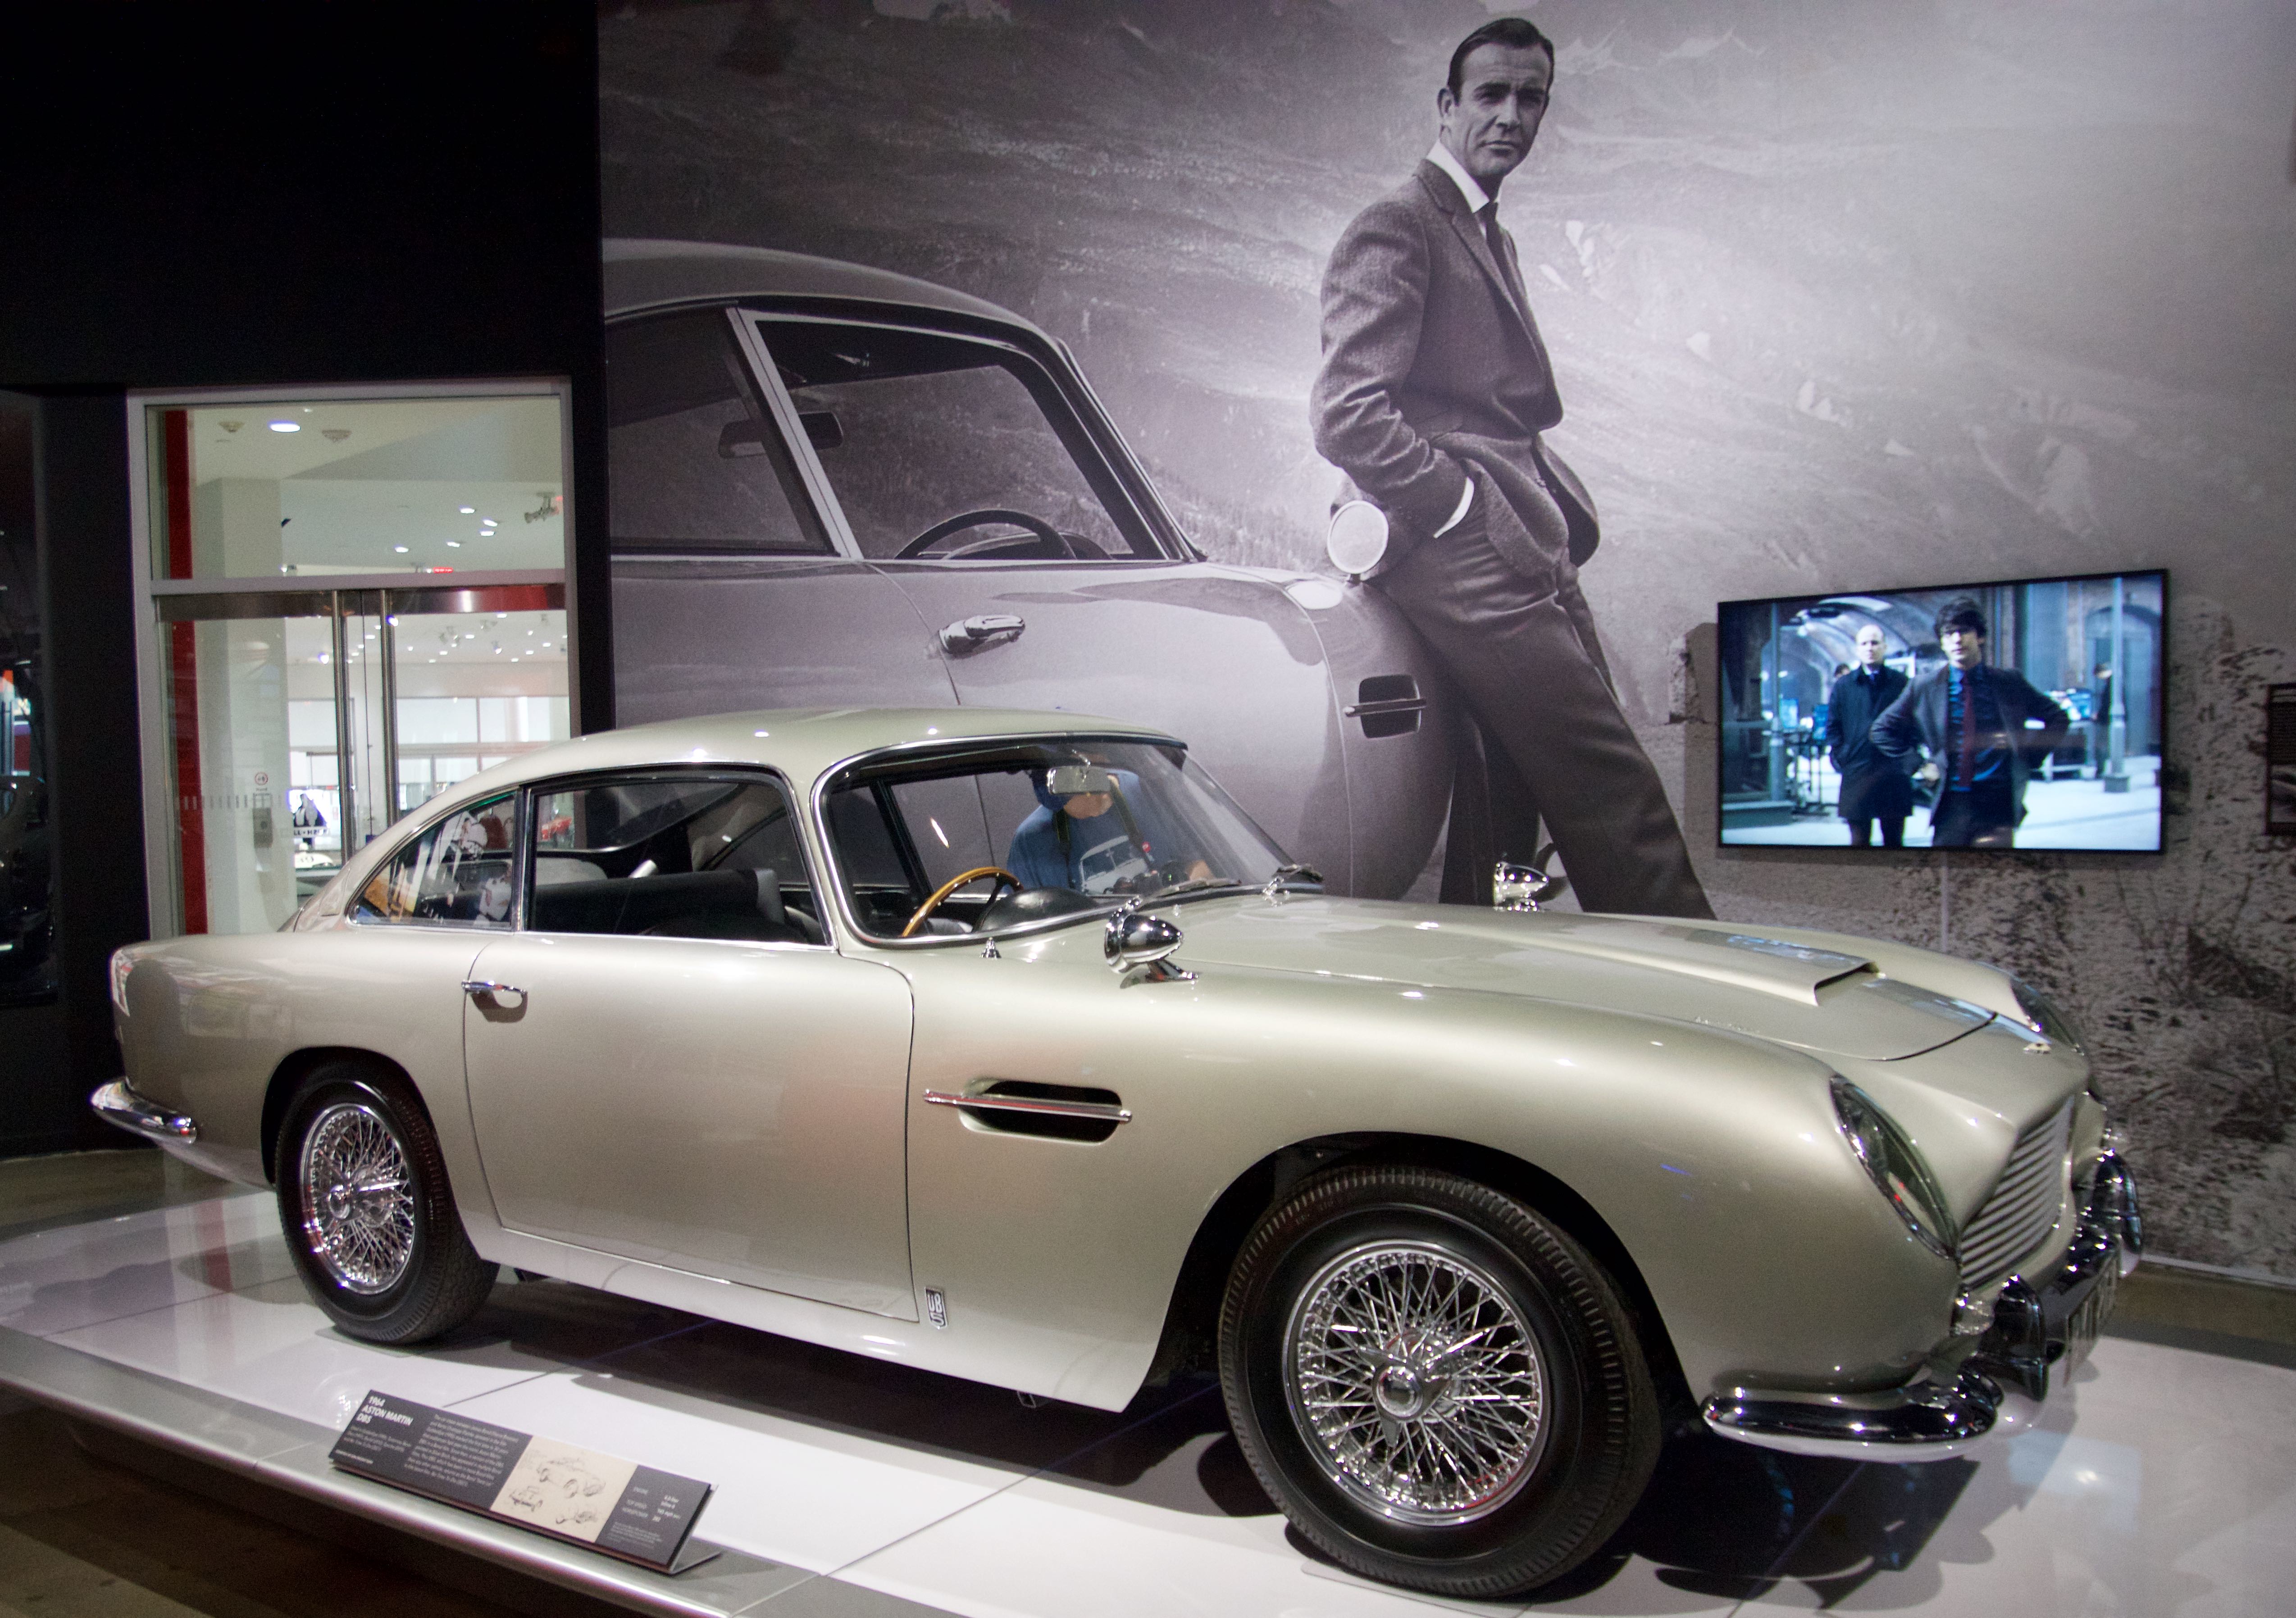 James Bond Aston Martin DB5 with Sean Connery photo background. DSC_0765